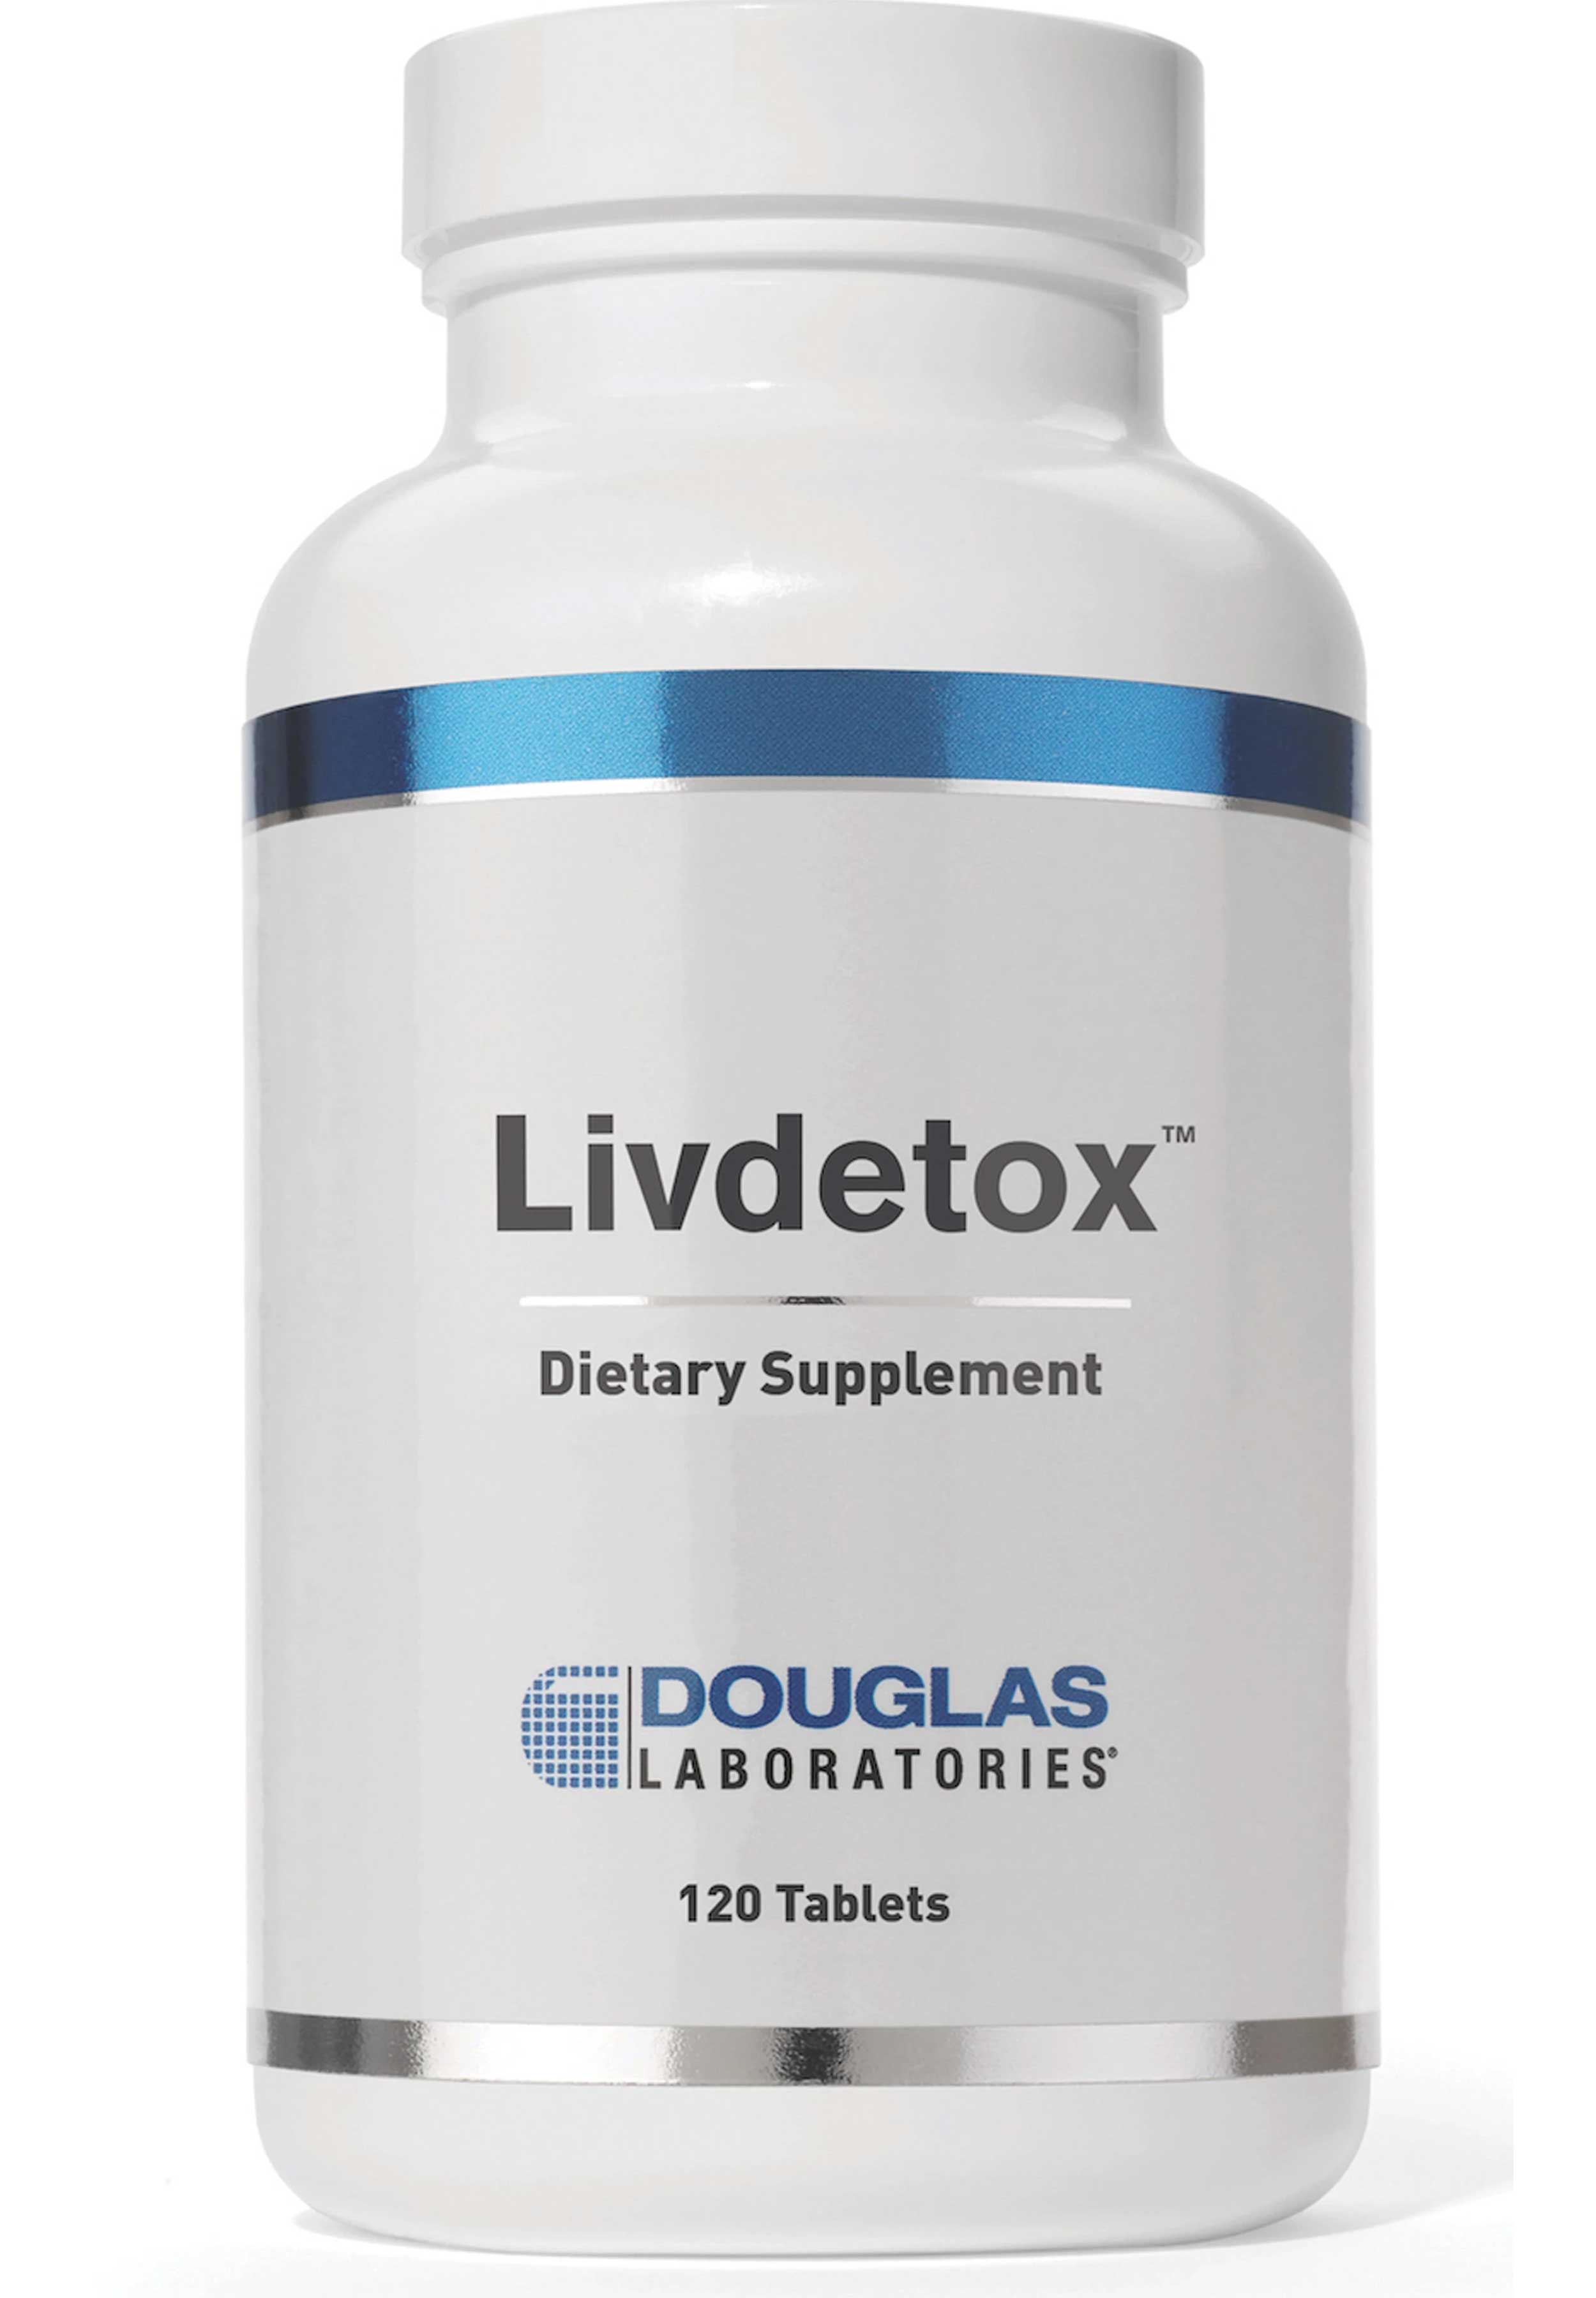 Douglas Laboratories Livdetox